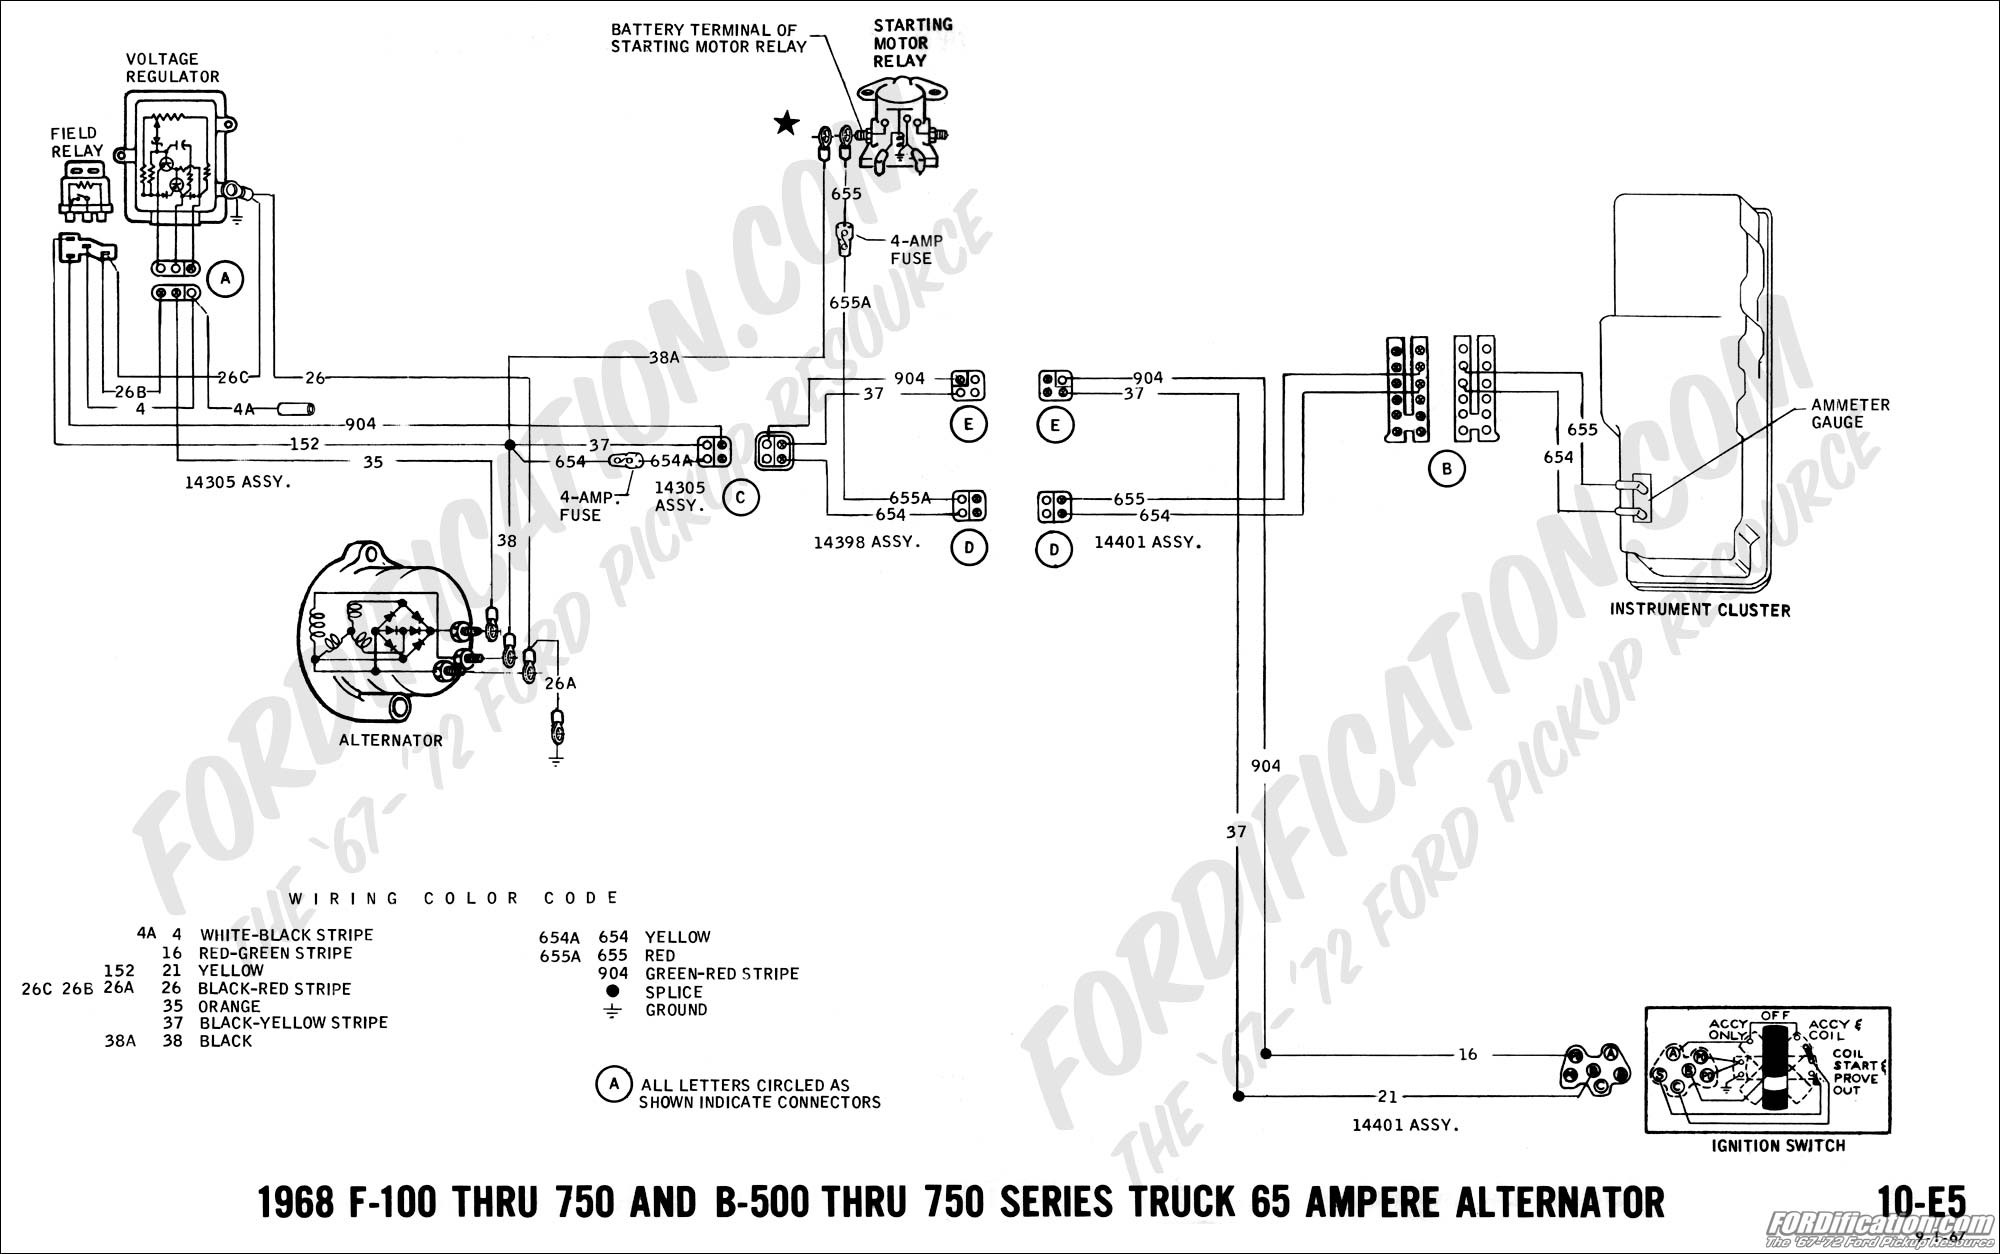 1965 Ford Alternator Wiring Diagram from mainetreasurechest.com